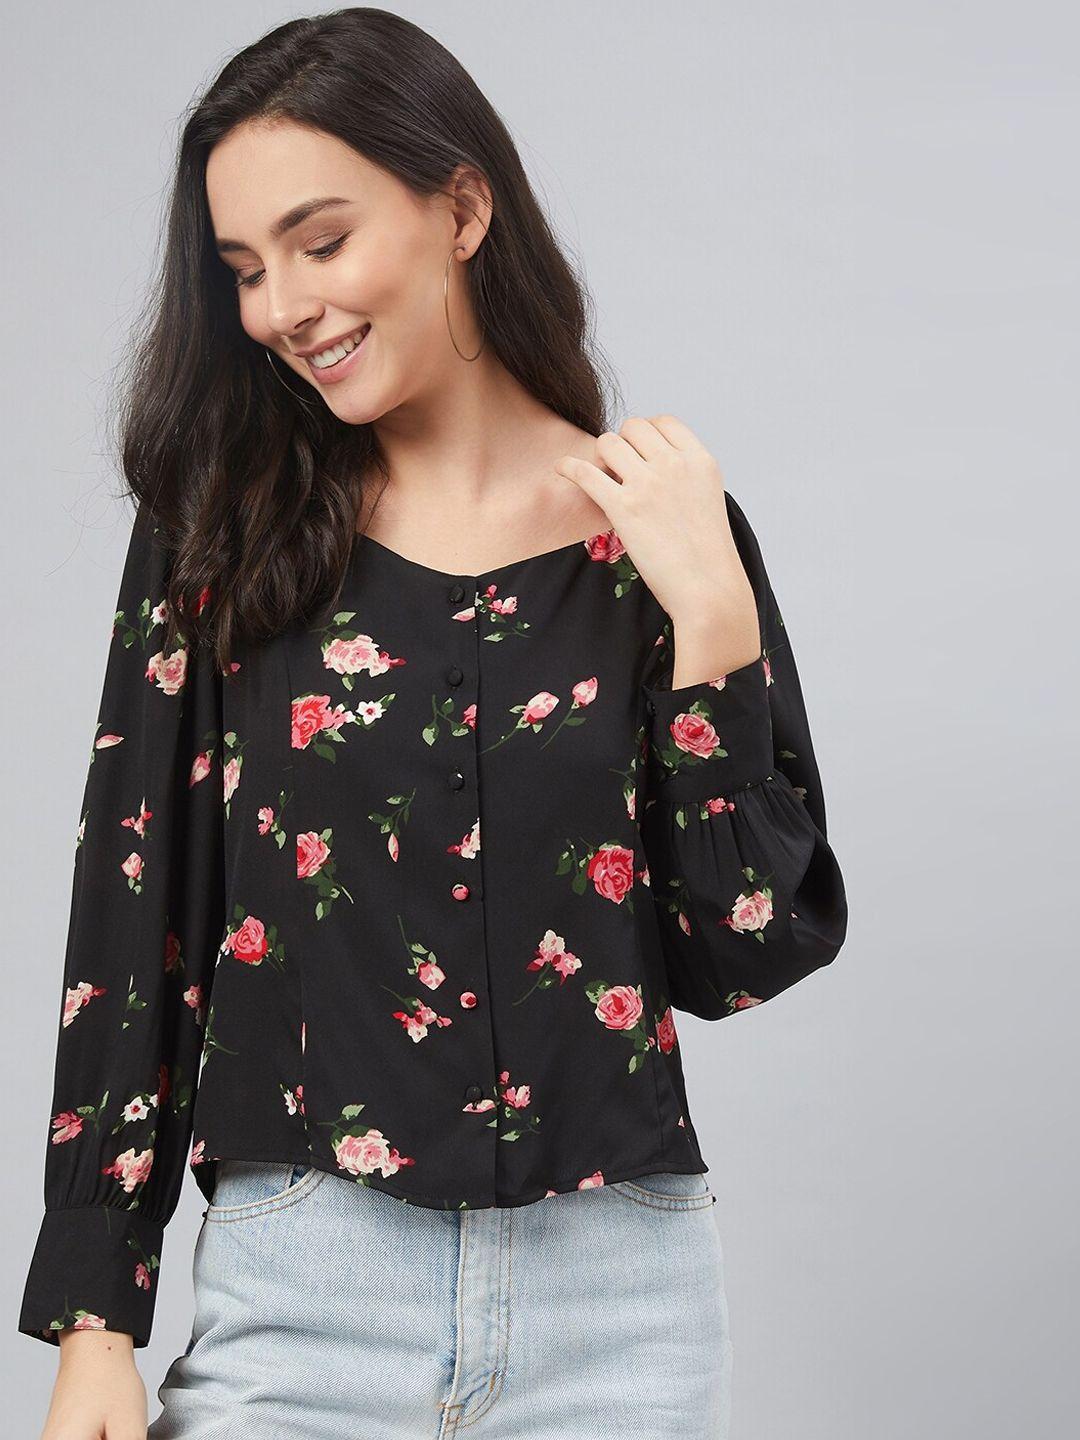 rare-women-black-&-pink-floral-printed-shirt-style-top